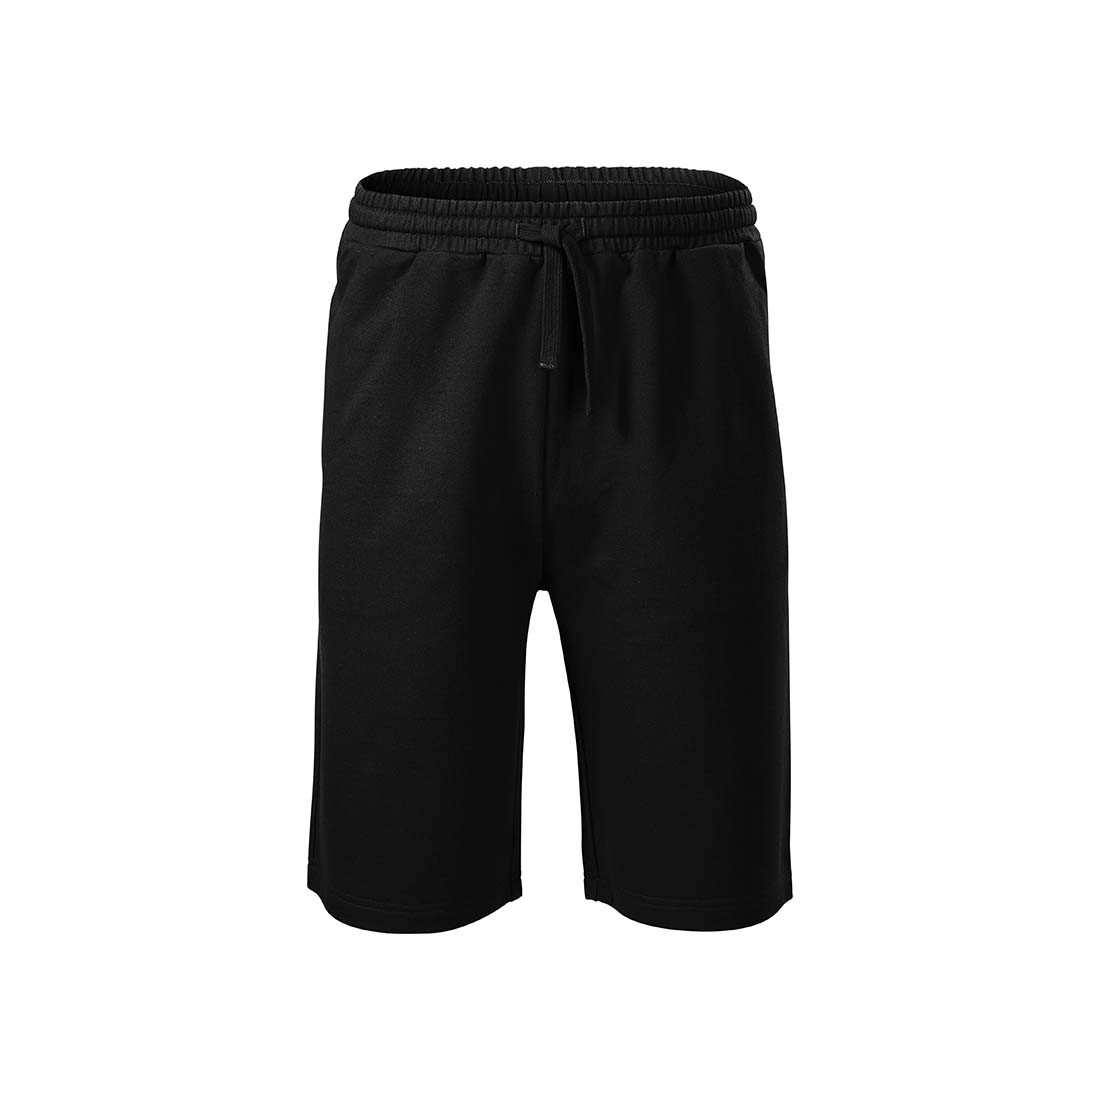 Men's Sports Shorts - Safetywear